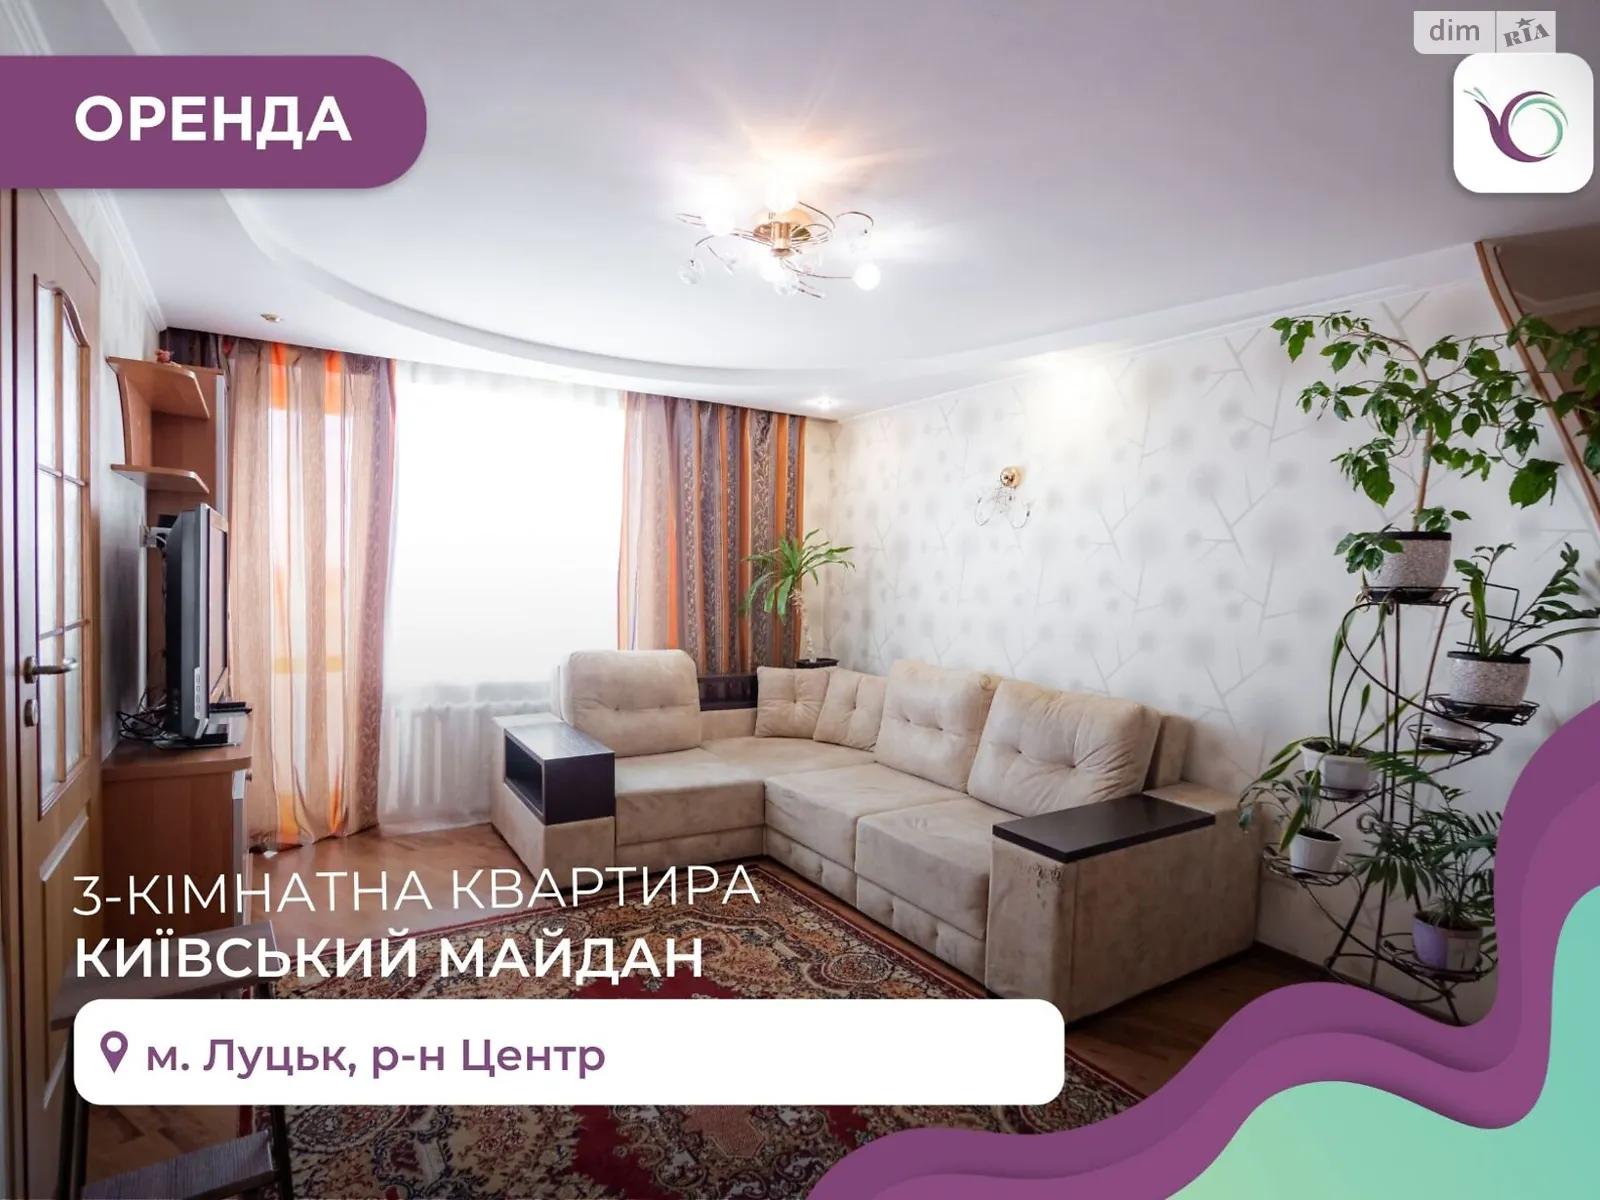 3-кімнатна квартира 59 кв. м у Луцьку, цена: 16000 грн